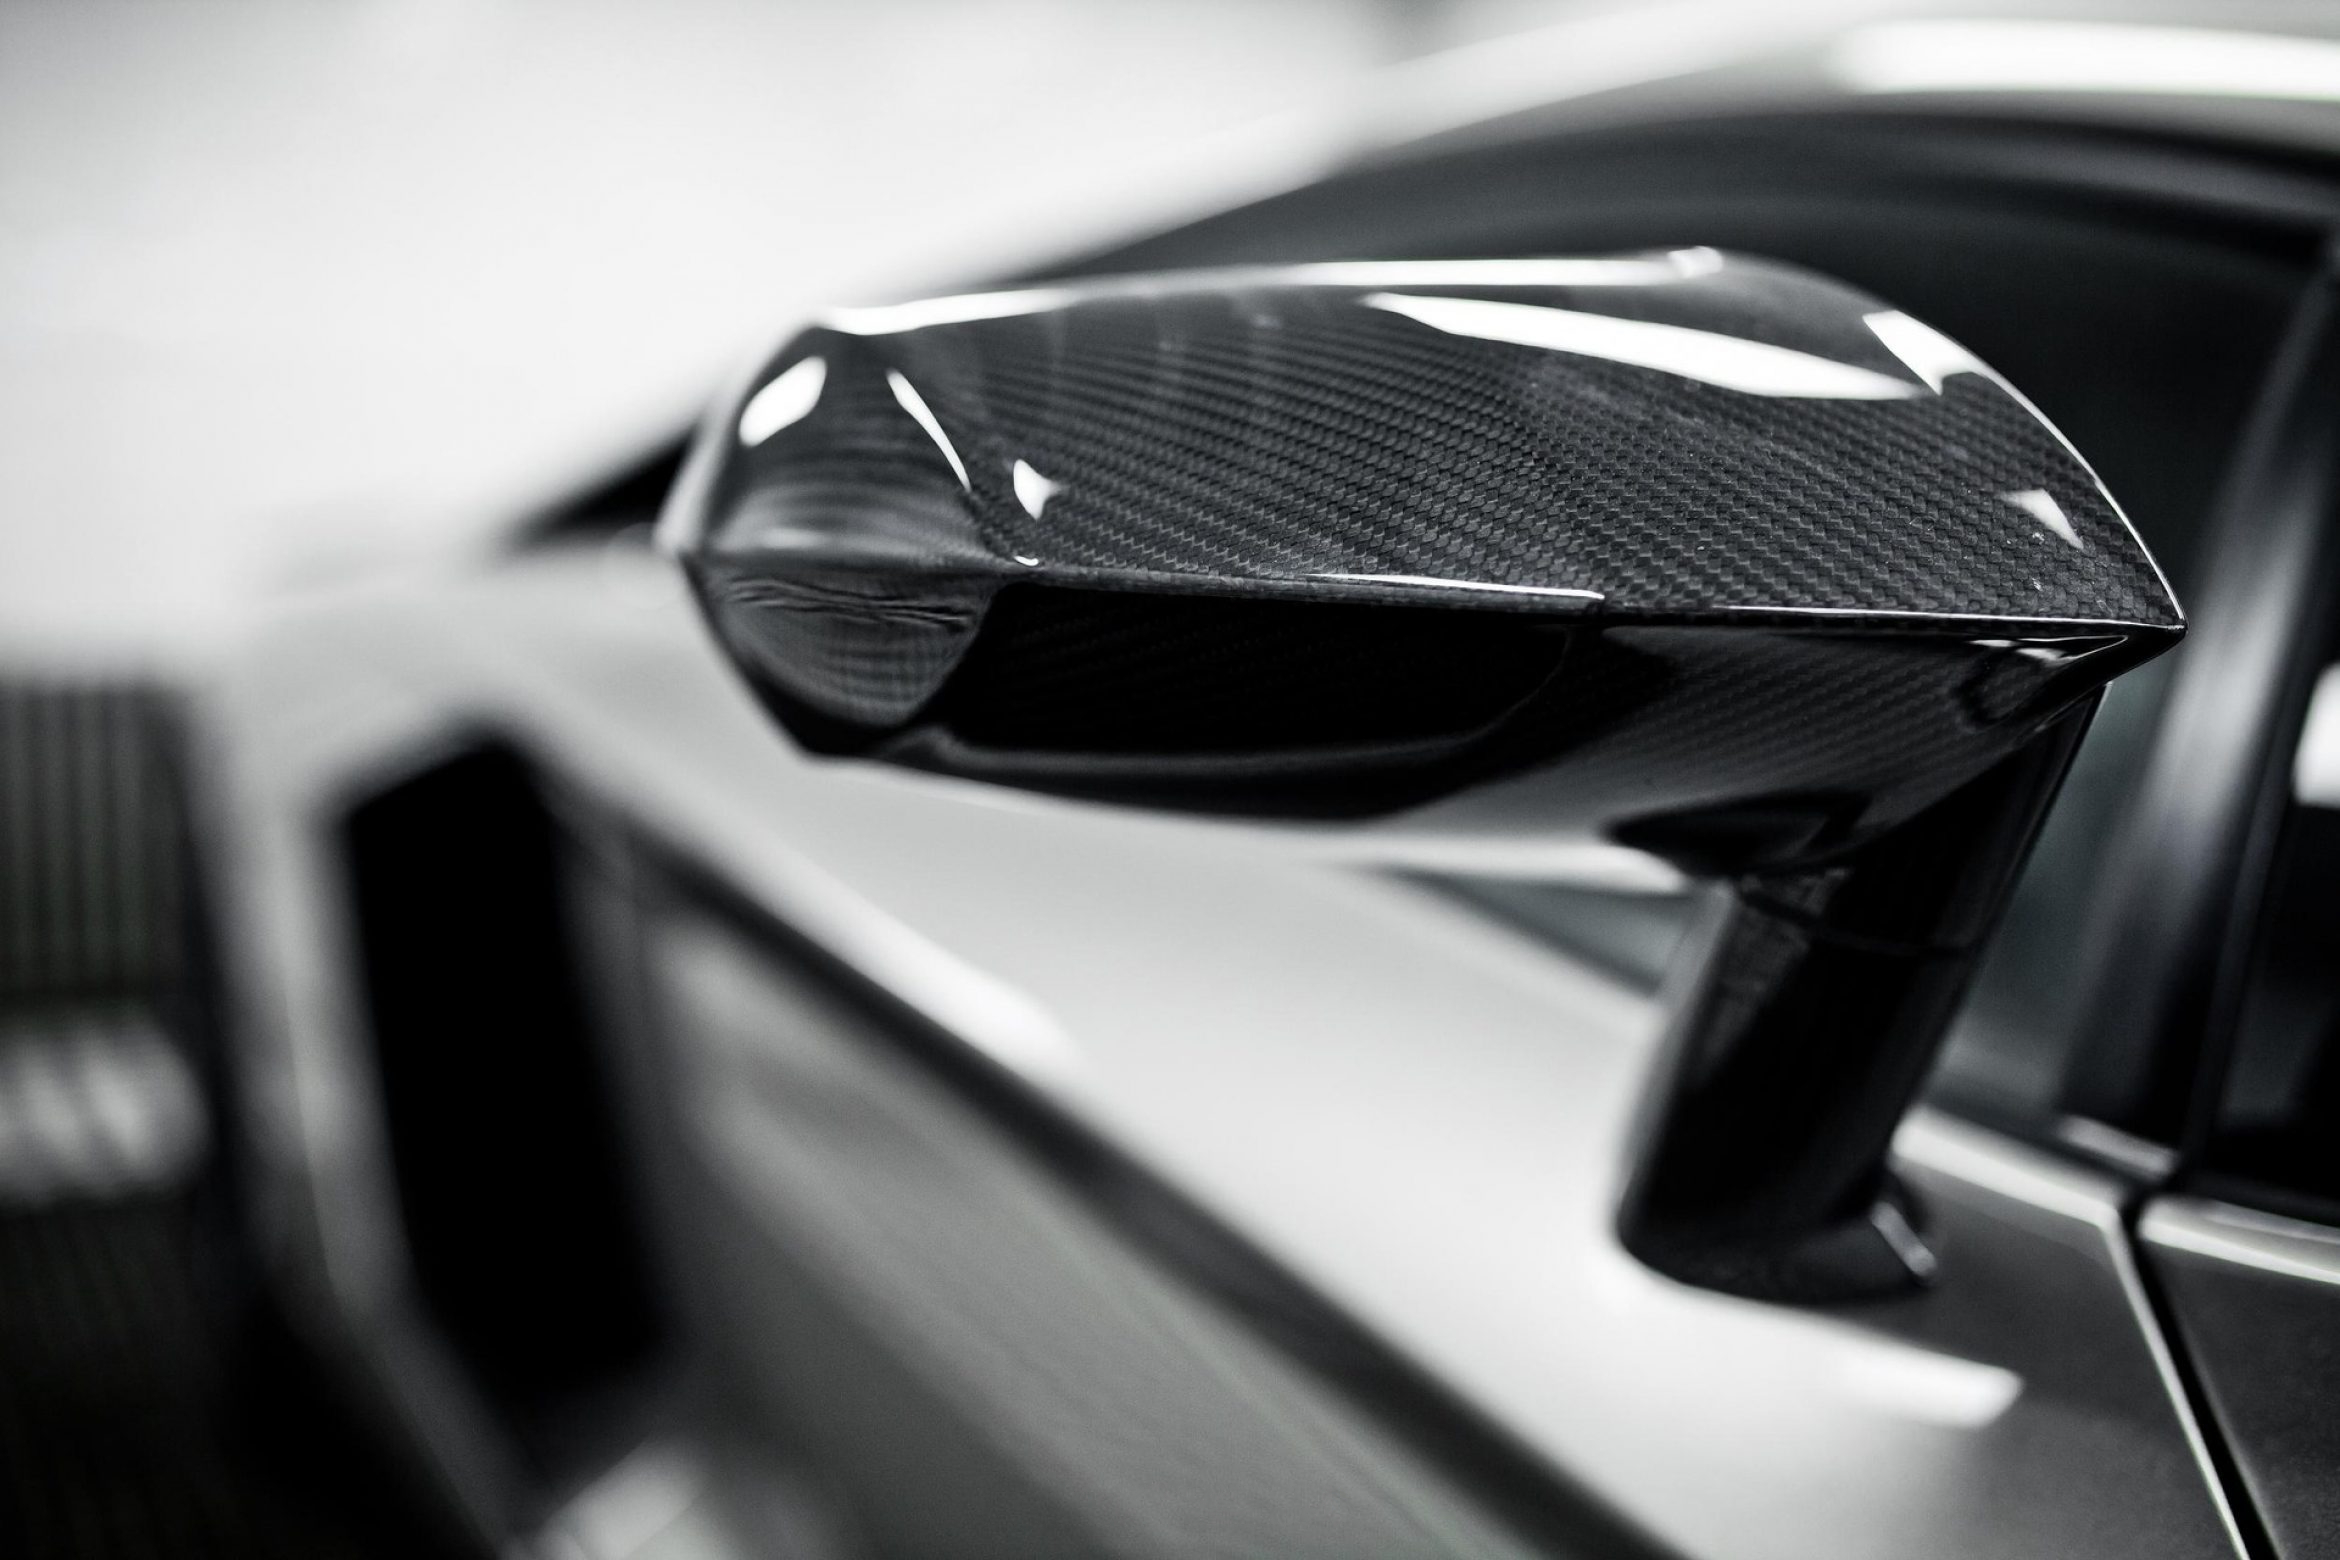 Mirror housing Carbon for Lamborghini Aventador